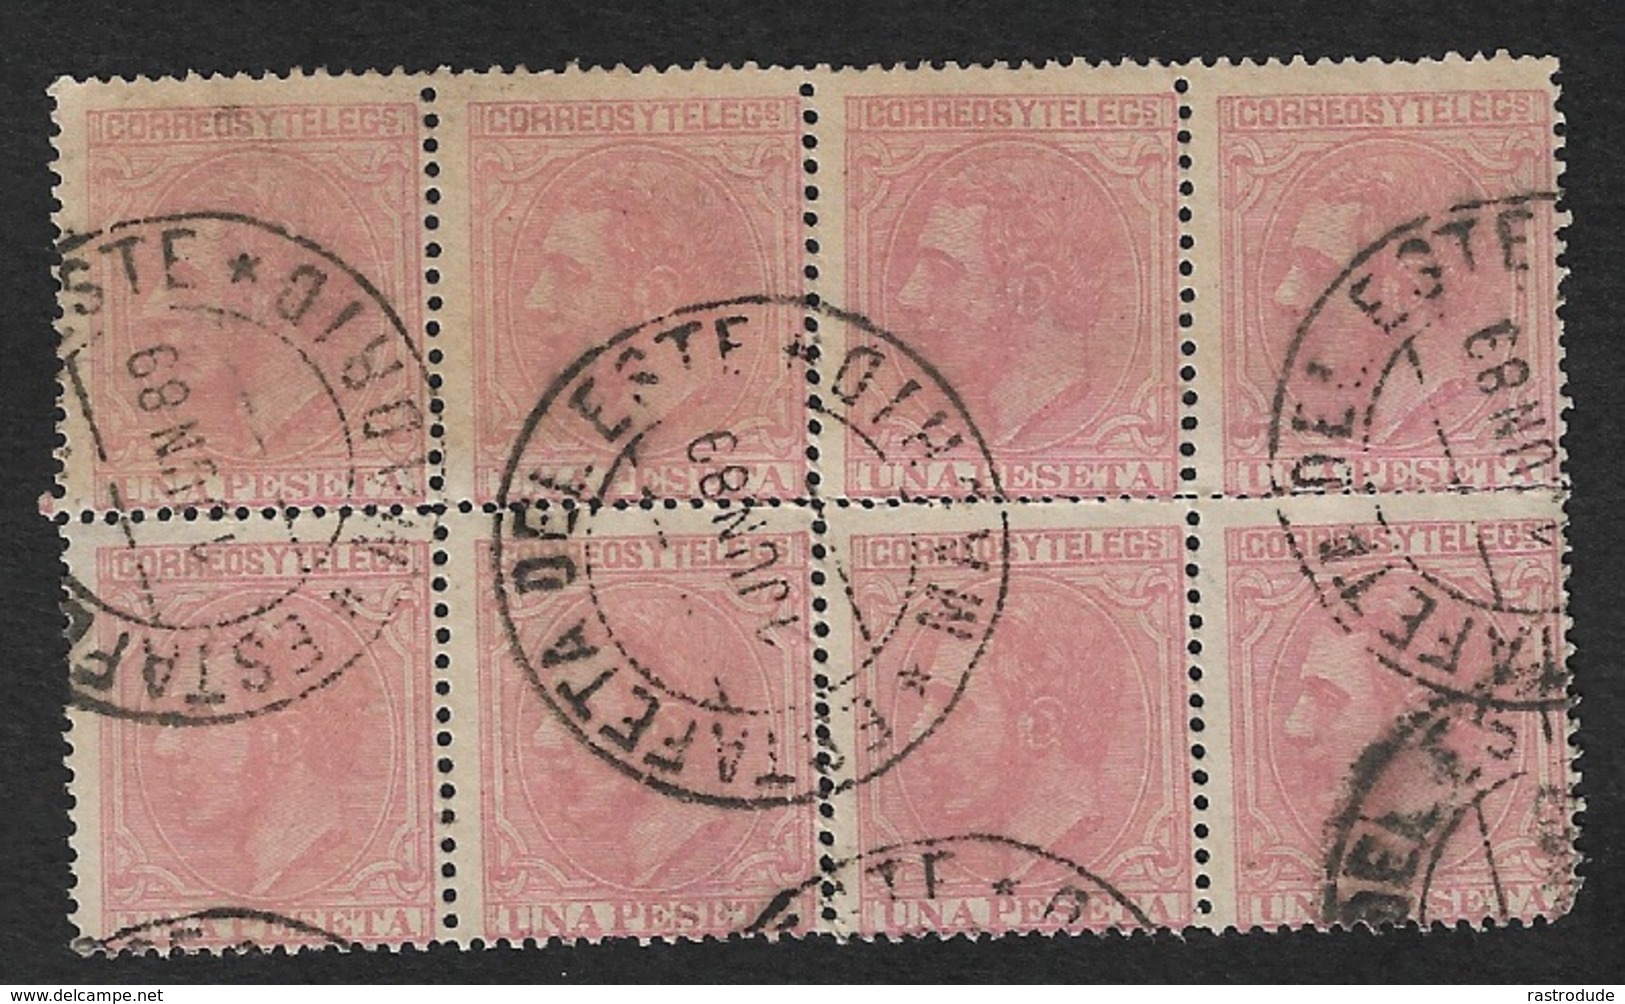 EDIFIL 207 ALFONSO XII. 1879 (BLOQUE DE 8). MATASELLOS ESTAFETA DEL ESTE (MADRID). 01-06-1889. LUJO. - Used Stamps